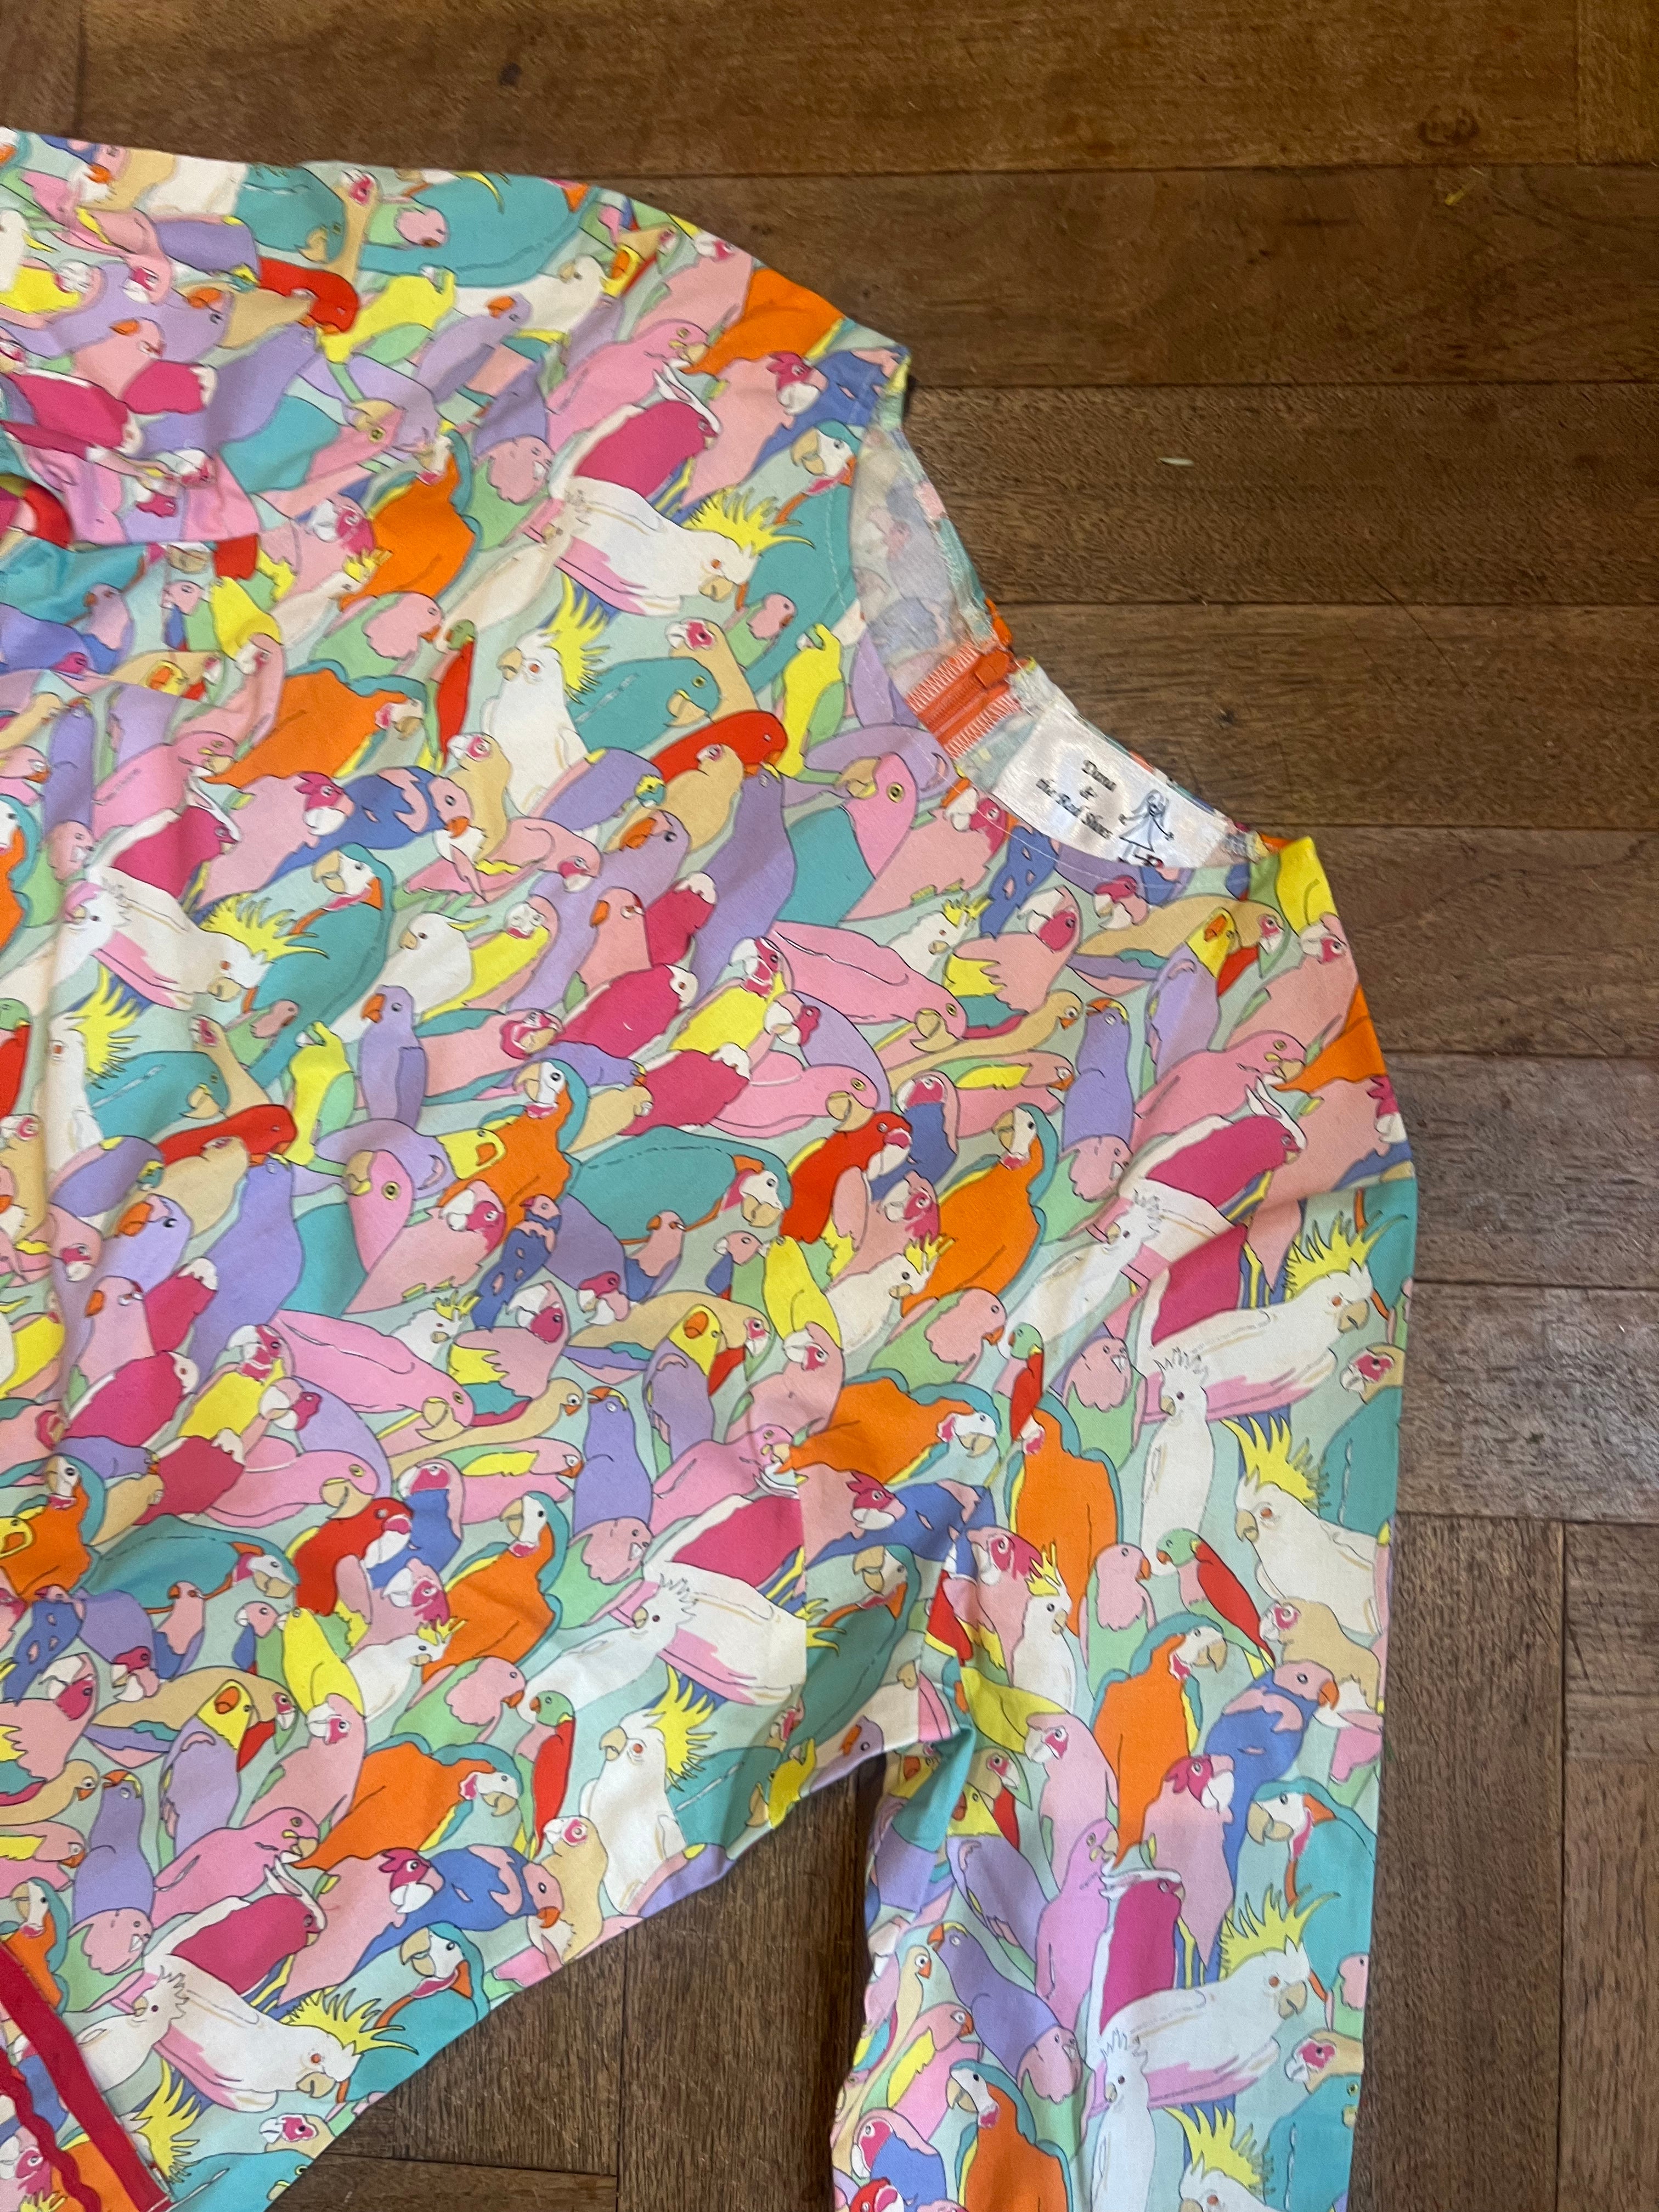 Parrot dress sample size 10